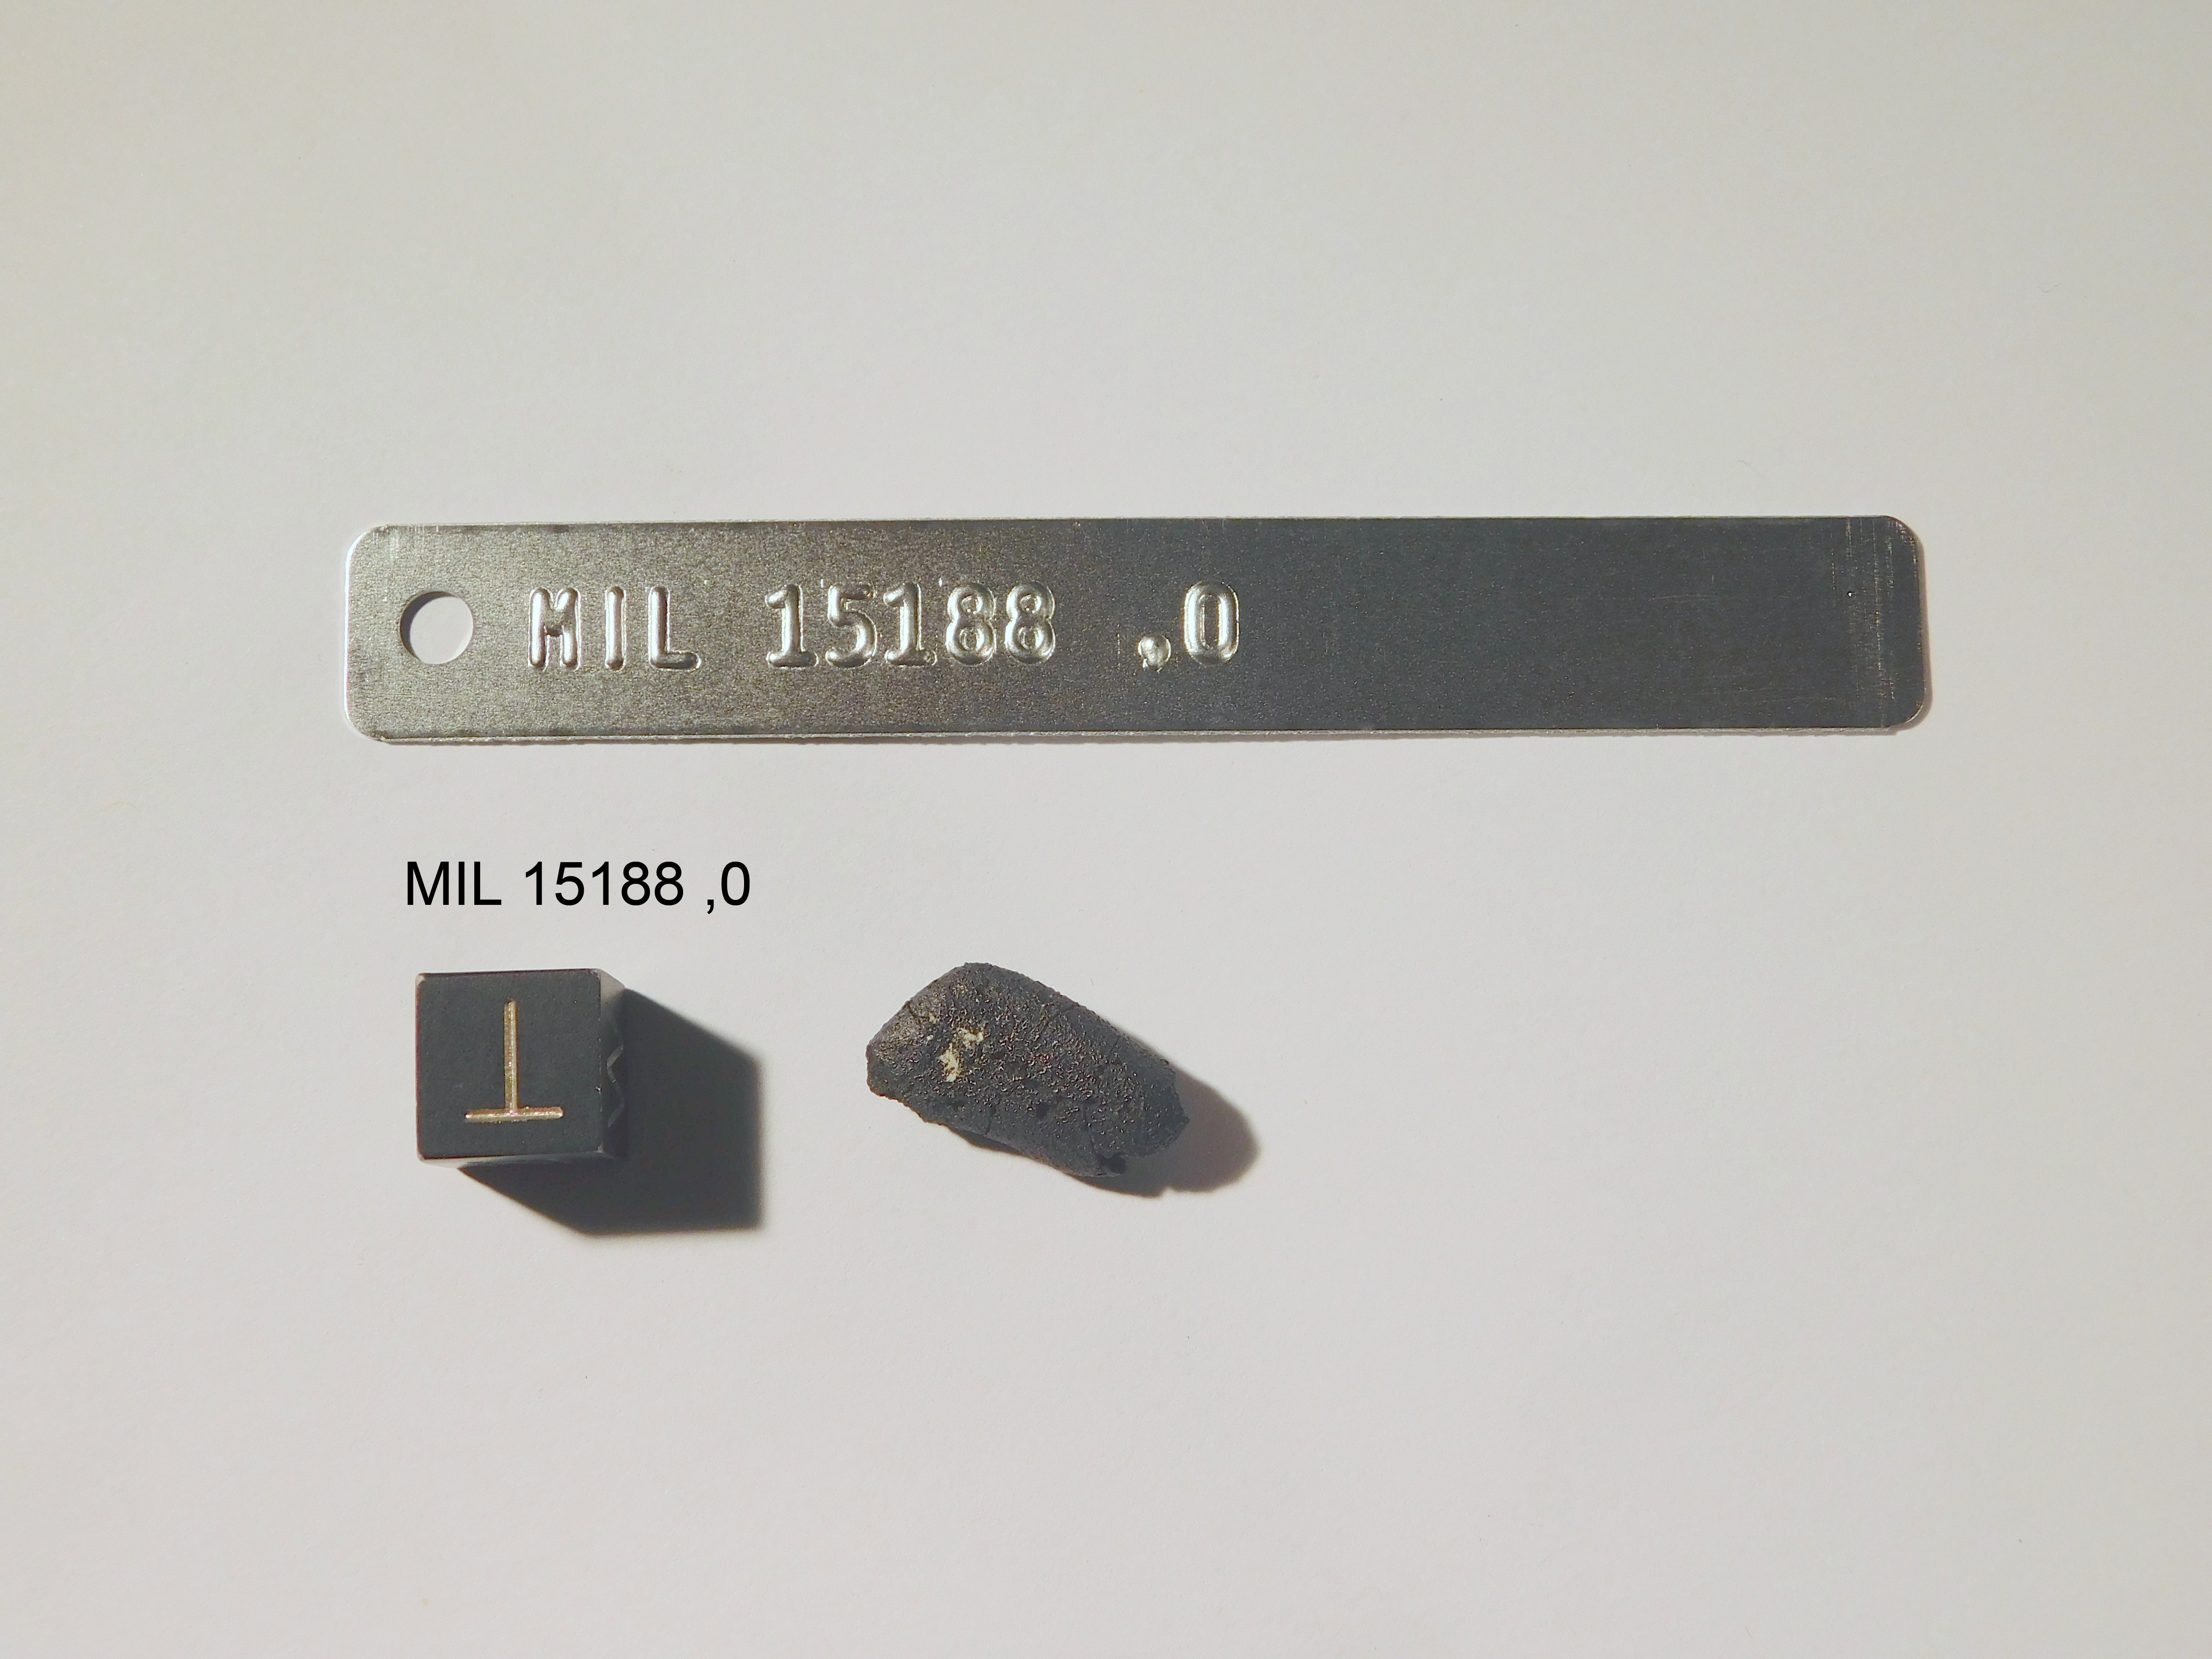 Lab Photo of Sample MIL 15188 Displaying Top Orientation